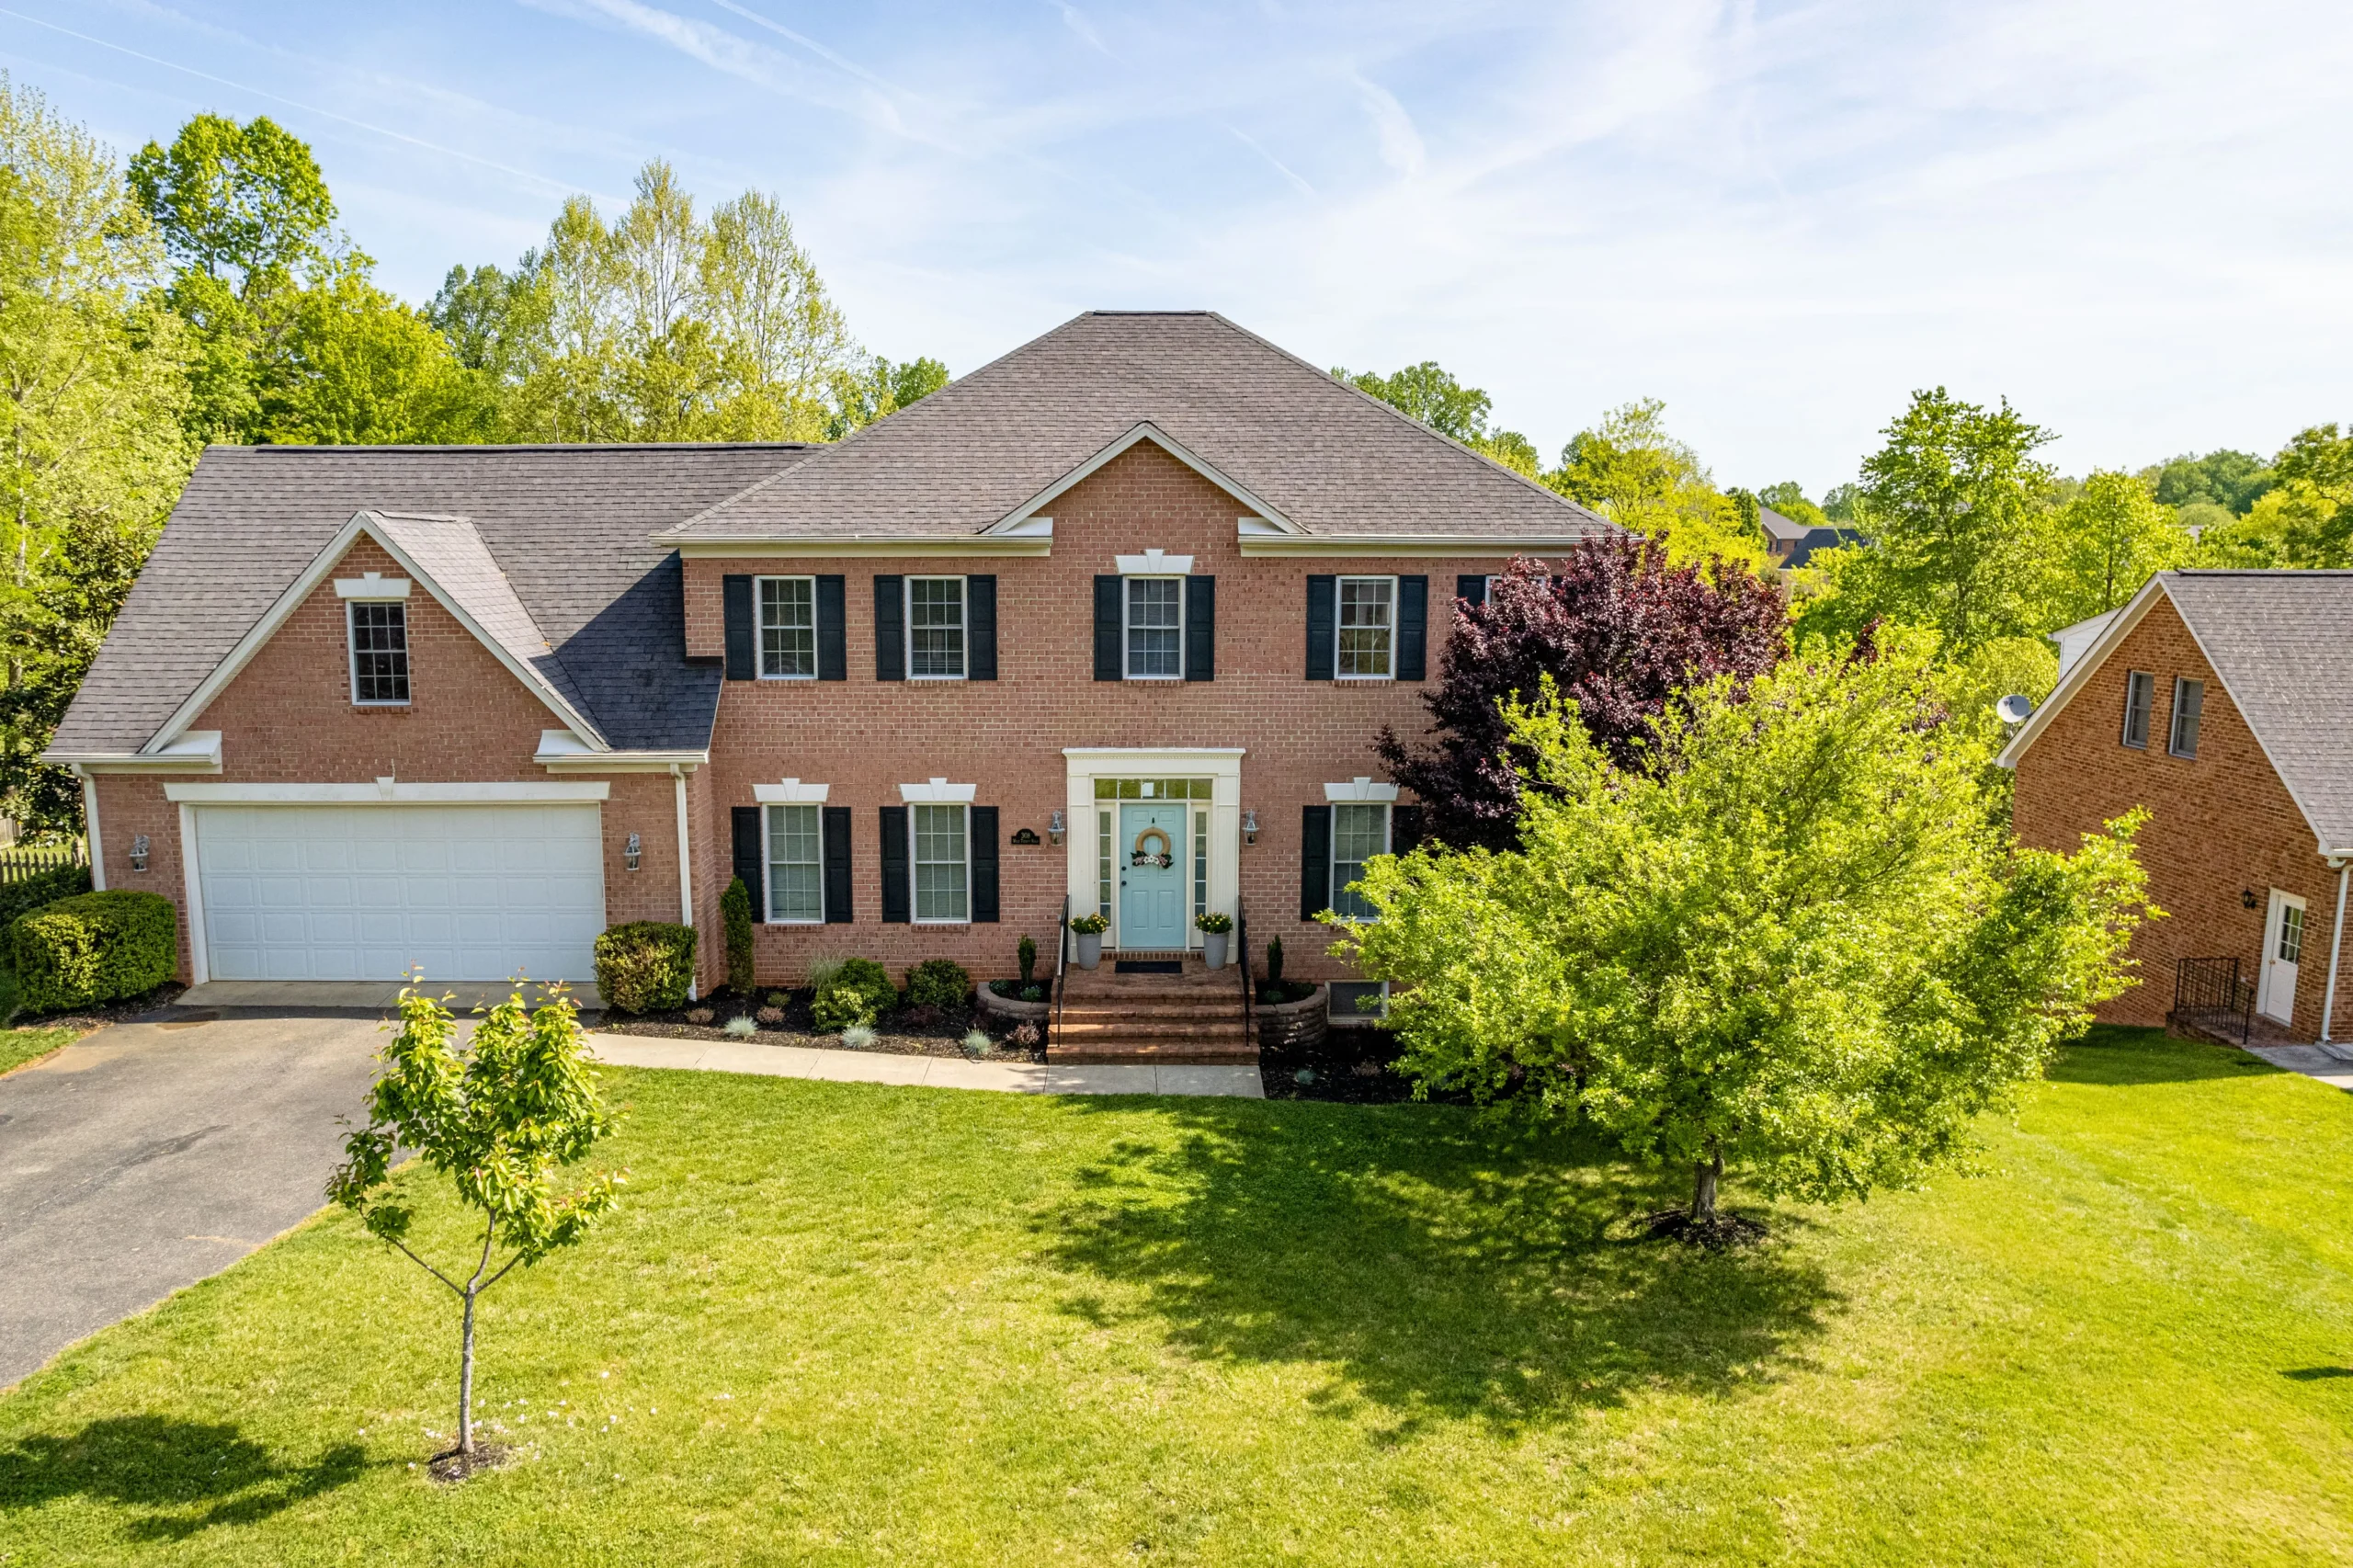 House sold in Lynchburg, VA